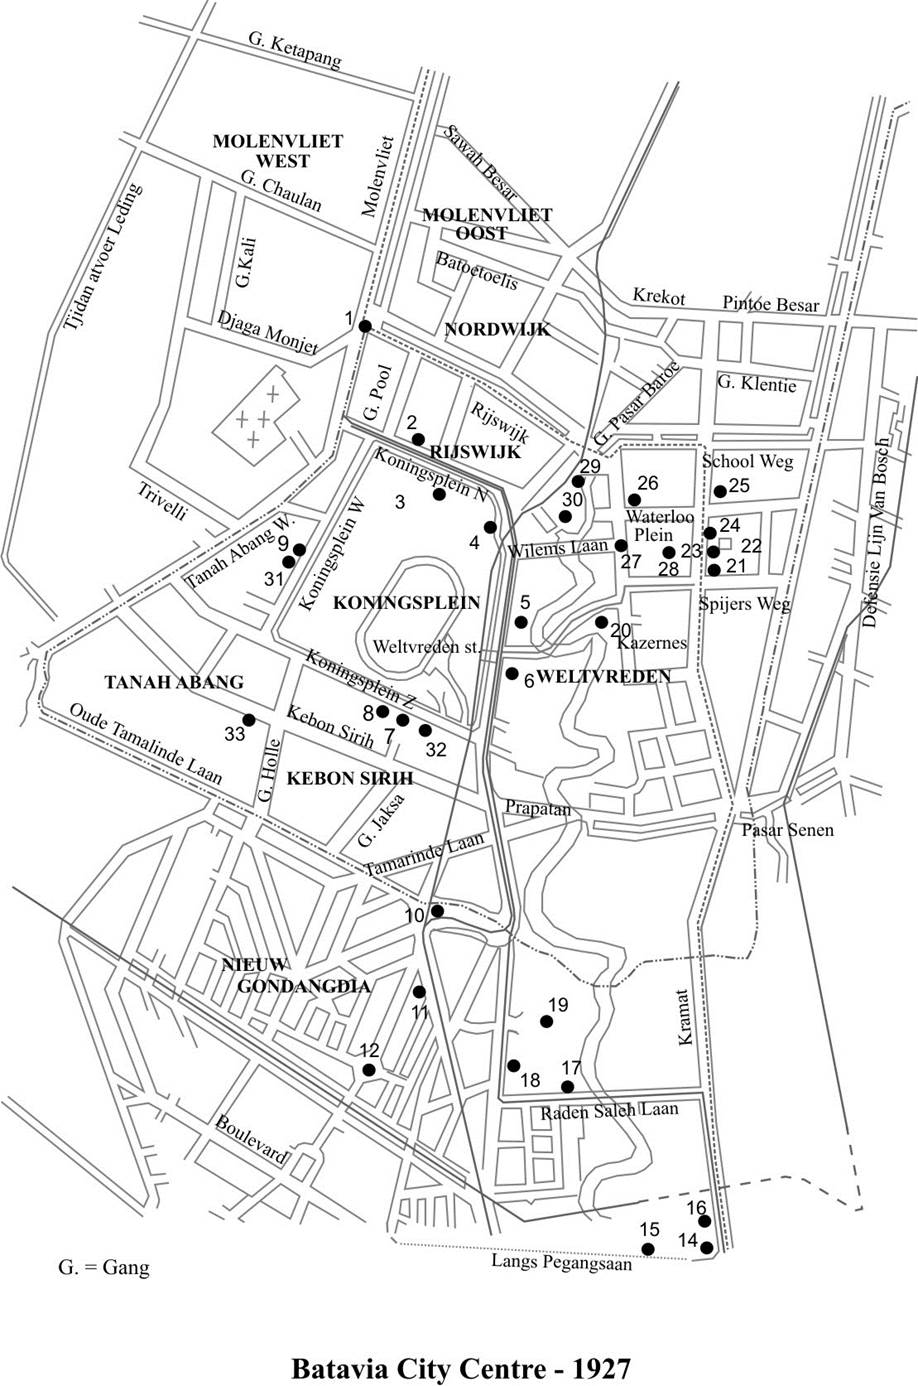 Map of Central Batavia 1927. Reproduced from: Vries, J. J. De (ed.), Jaarboek van Batavia en omstreken 1927, Kolff, Batavia 1927.